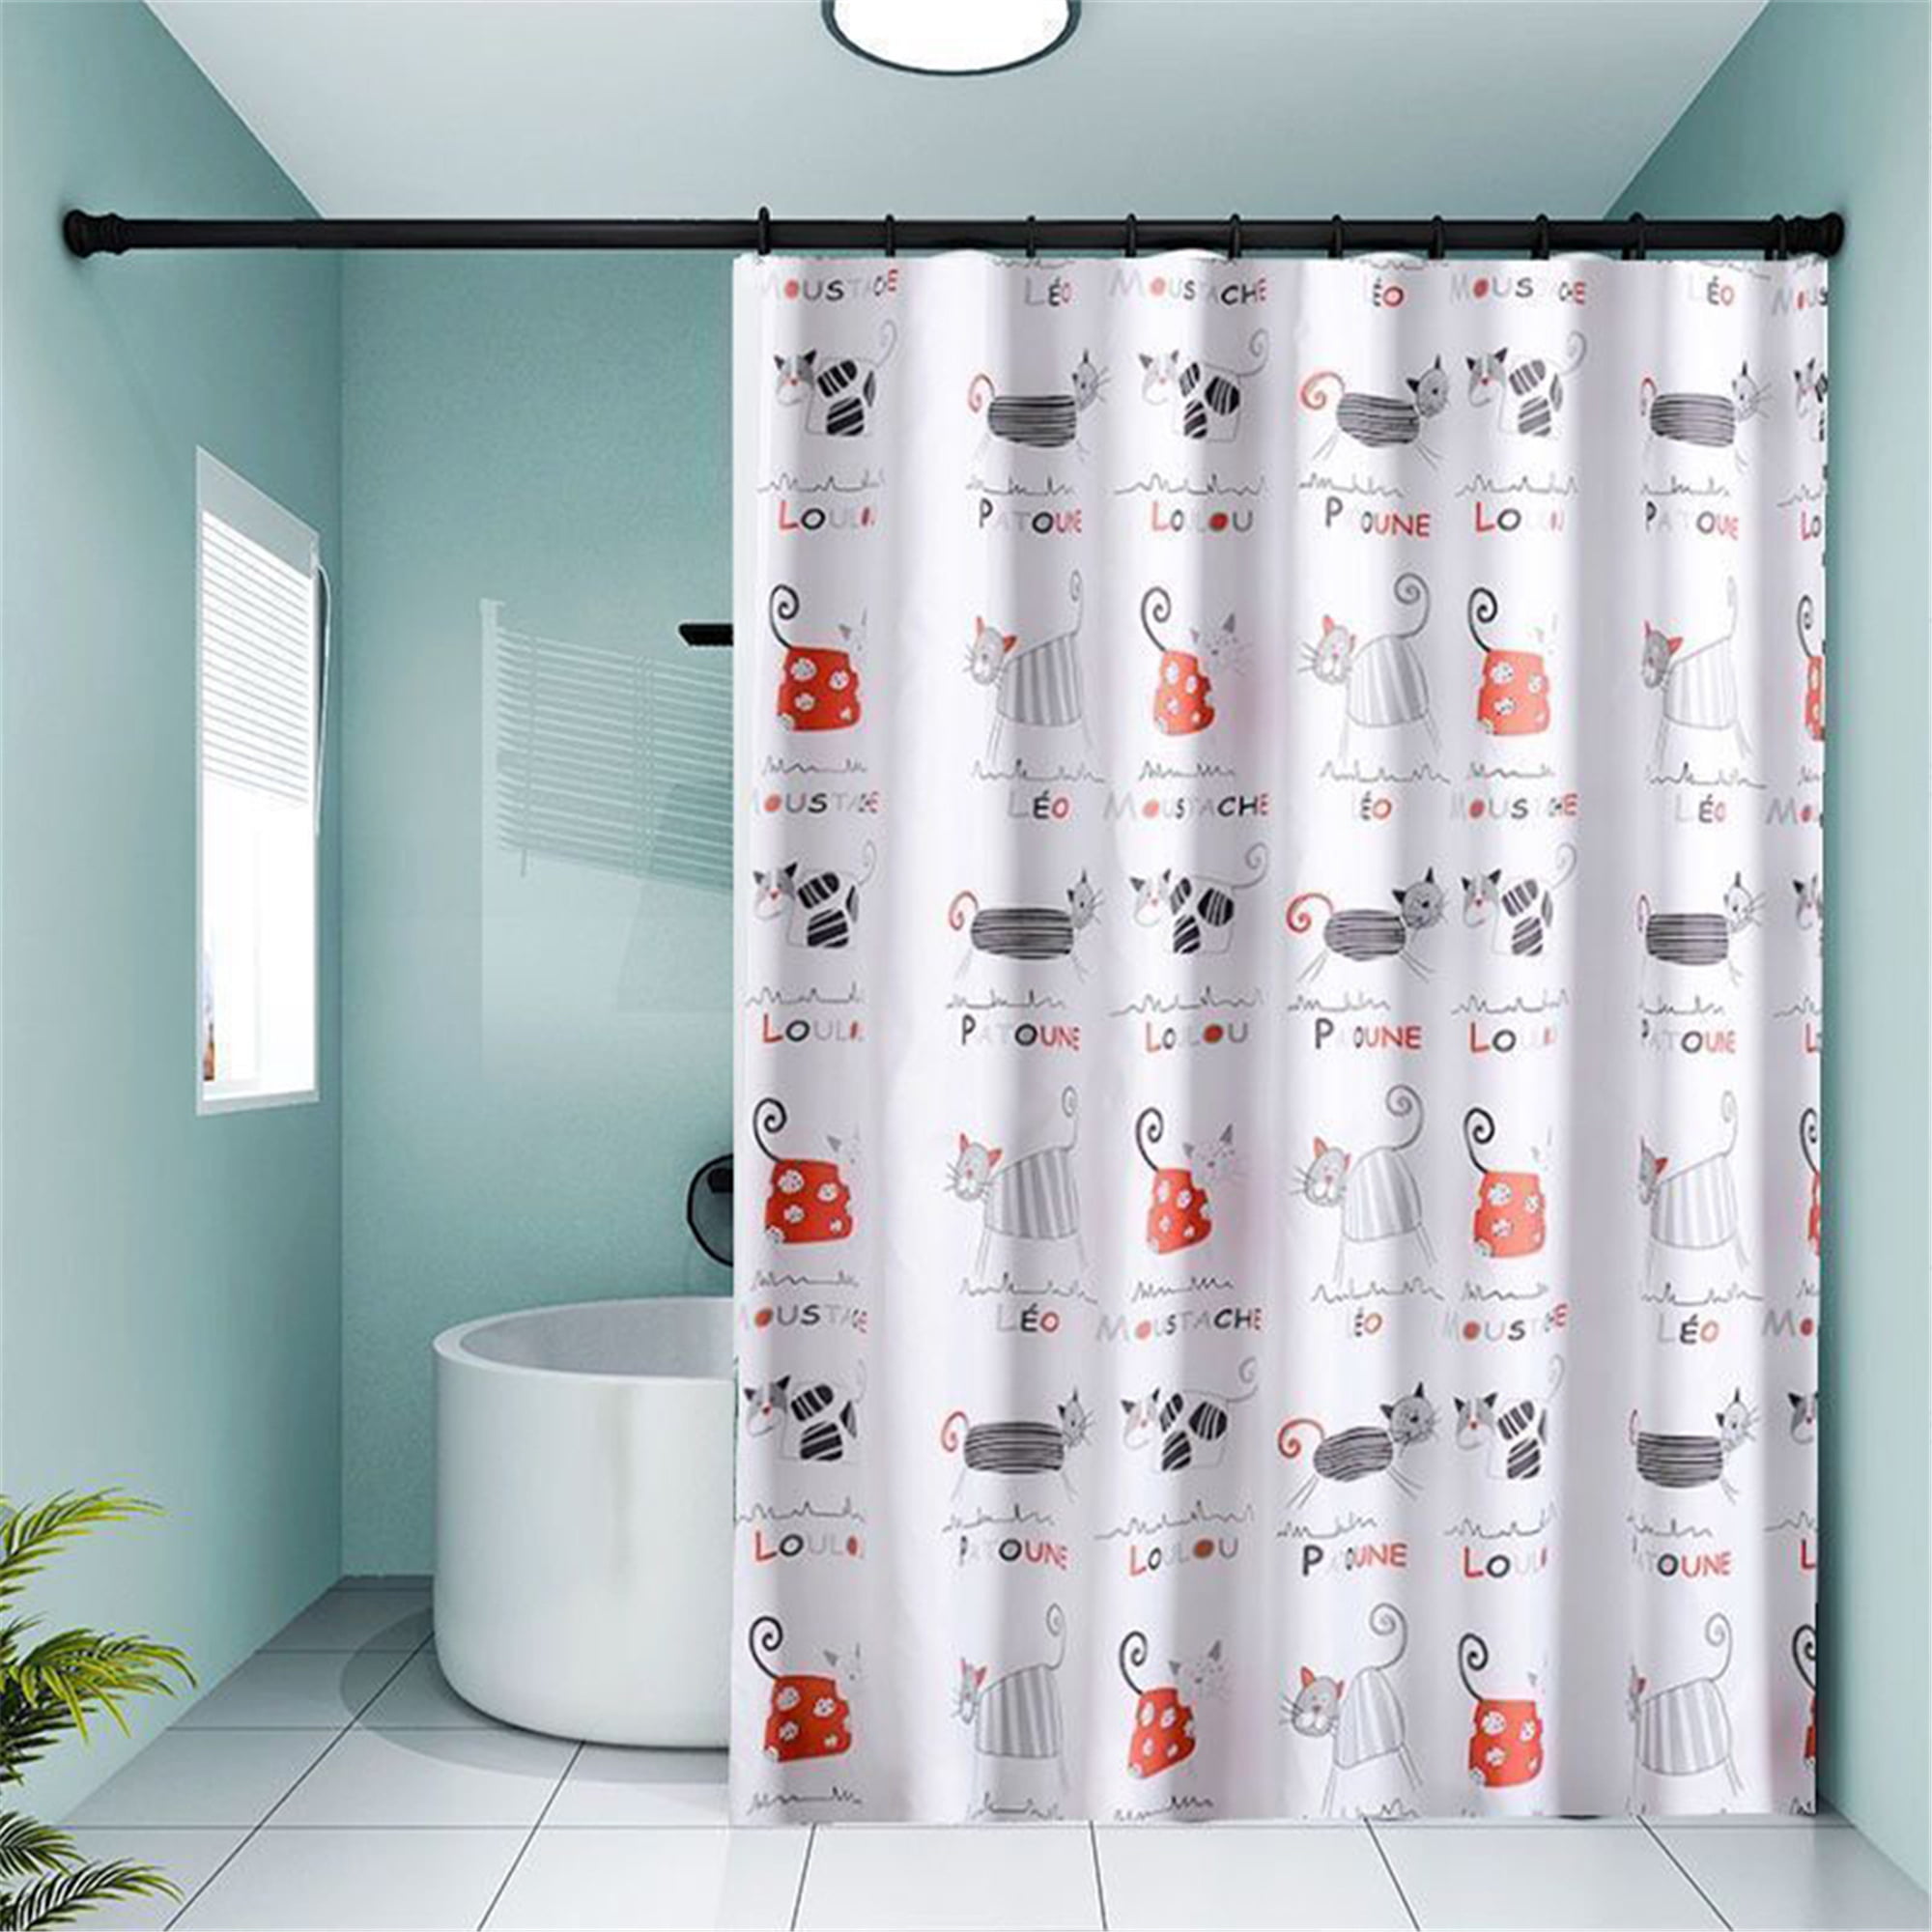 180x180cm Waterproof Fabric Home Decor Bathroom Shower Curtain Cats read news 